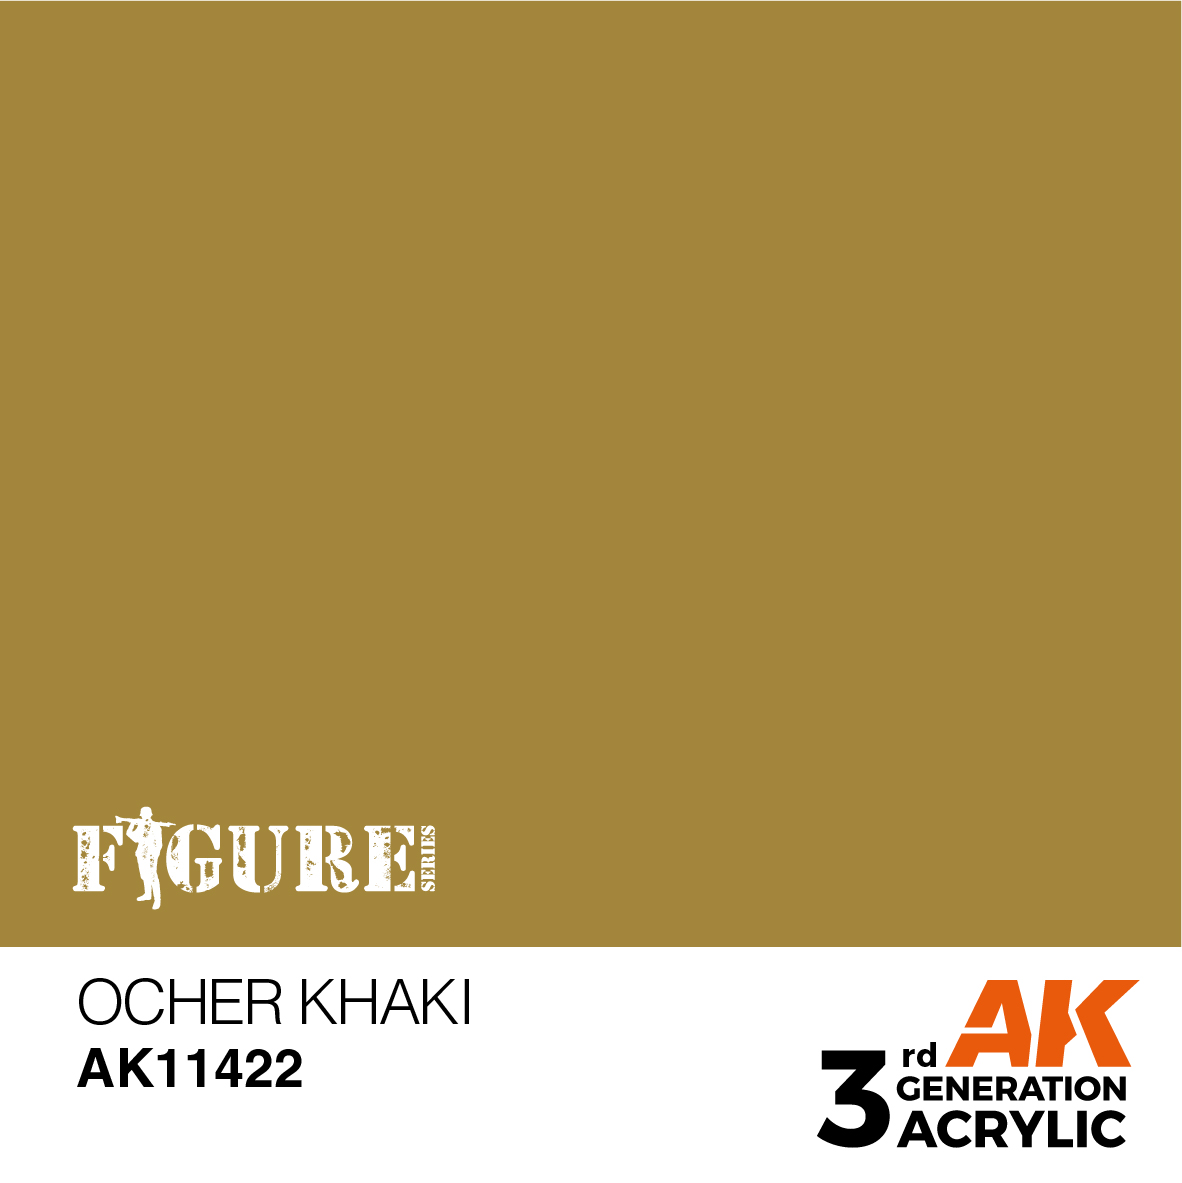 OCHER KHAKI – FIGURES